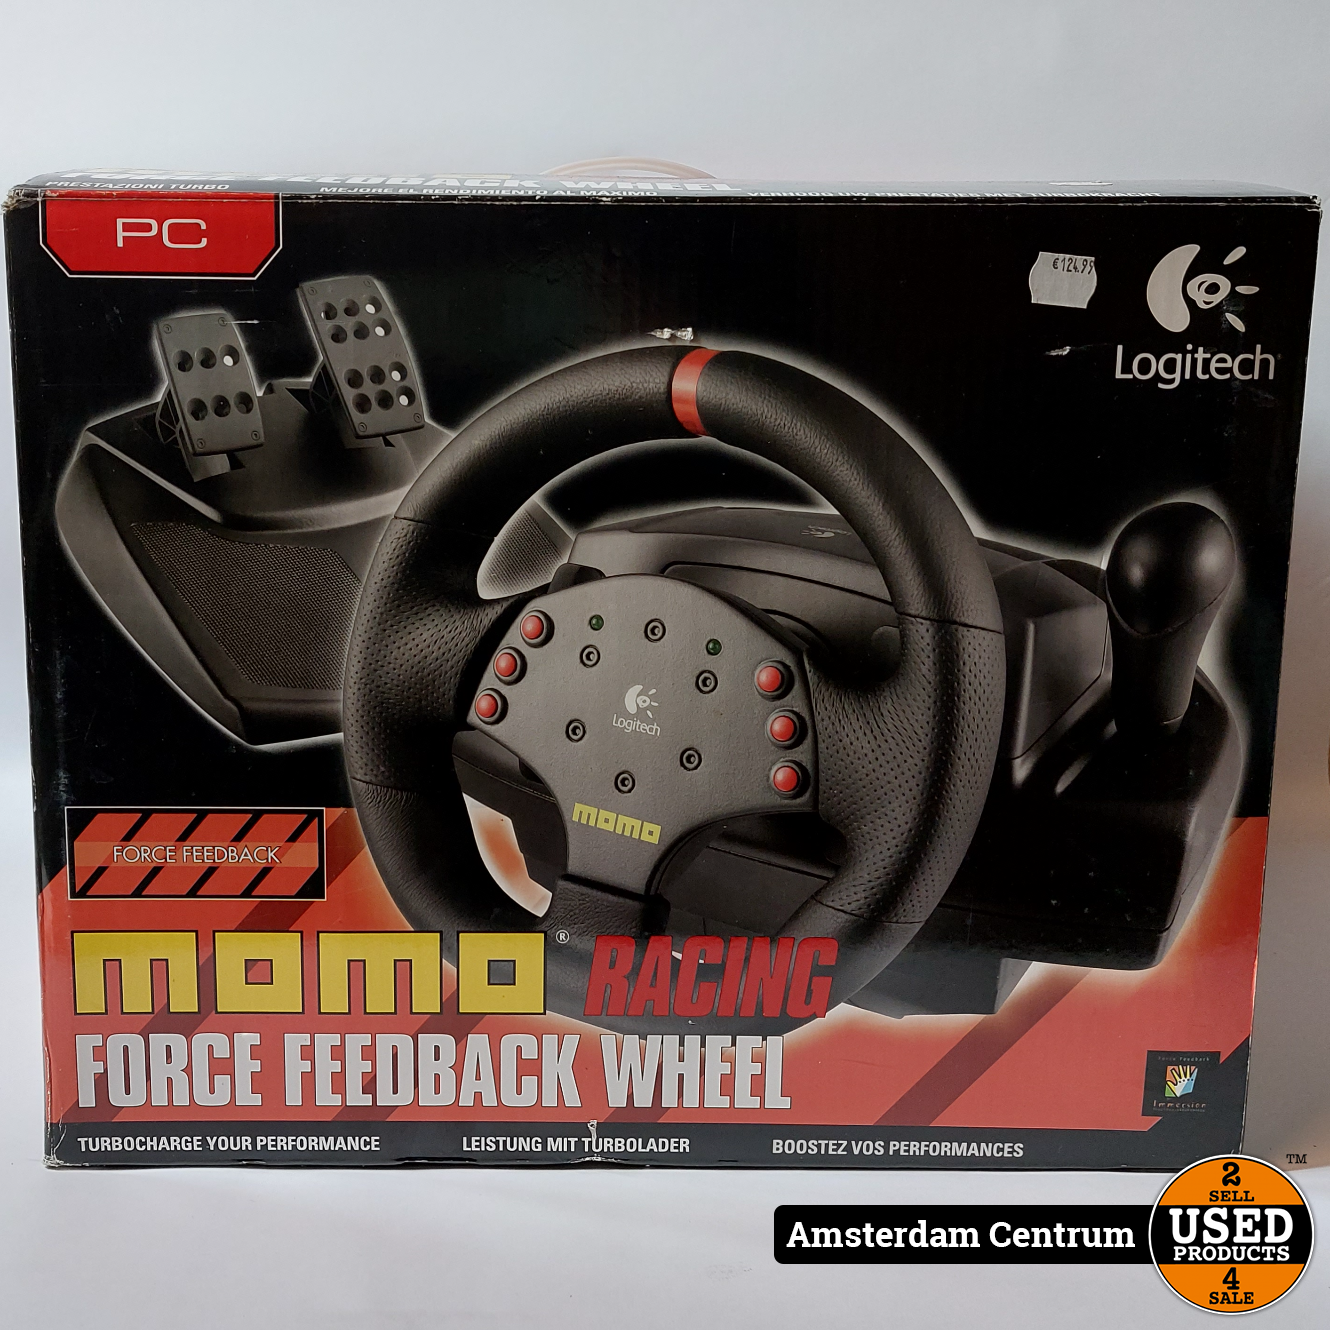 gevangenis Herinnering onderwijs Logitech Momo Racing Force Feedback Wheel - Incl. Garantie - Used Products  Amsterdam Centrum